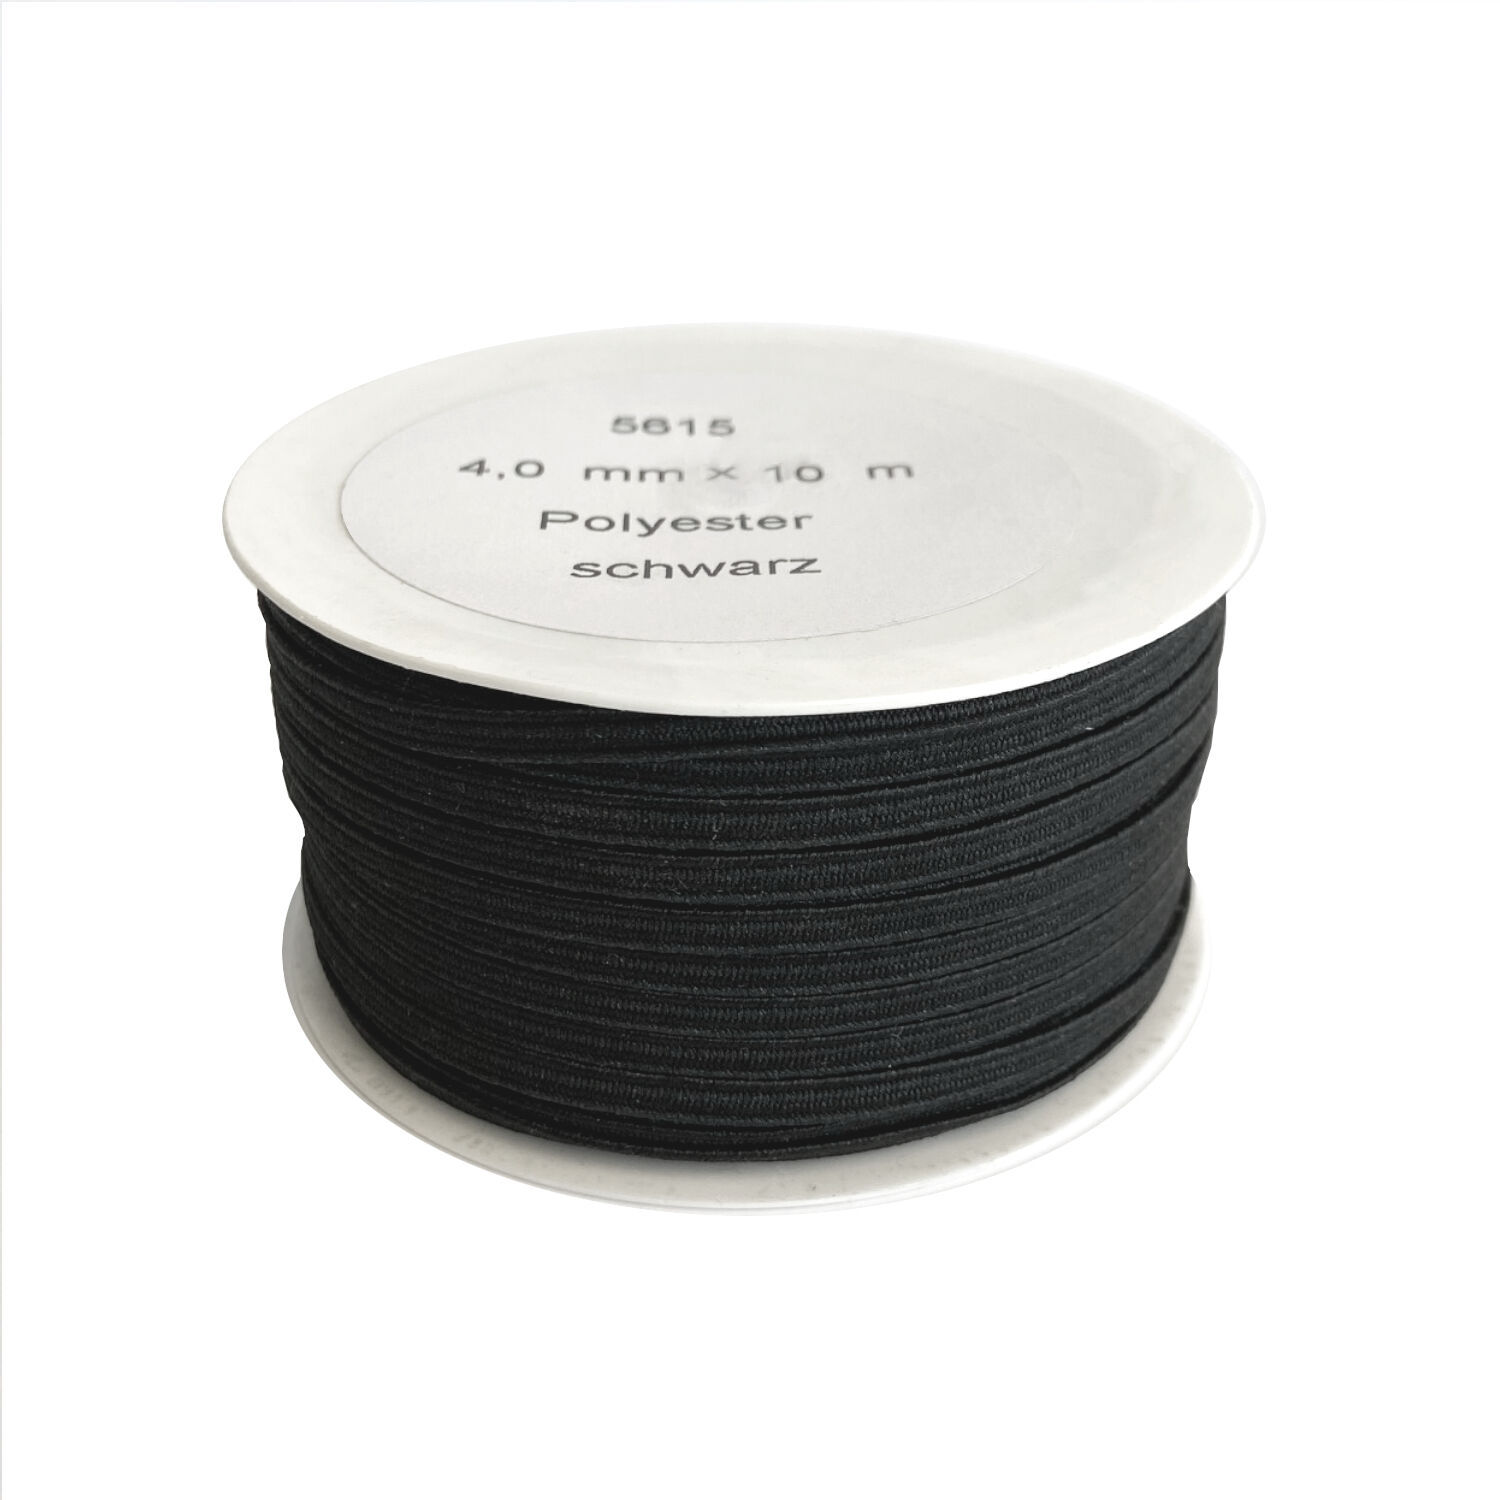 SALE Gummikordel / Elastikband, 4 mm x 10 m, Schwarz